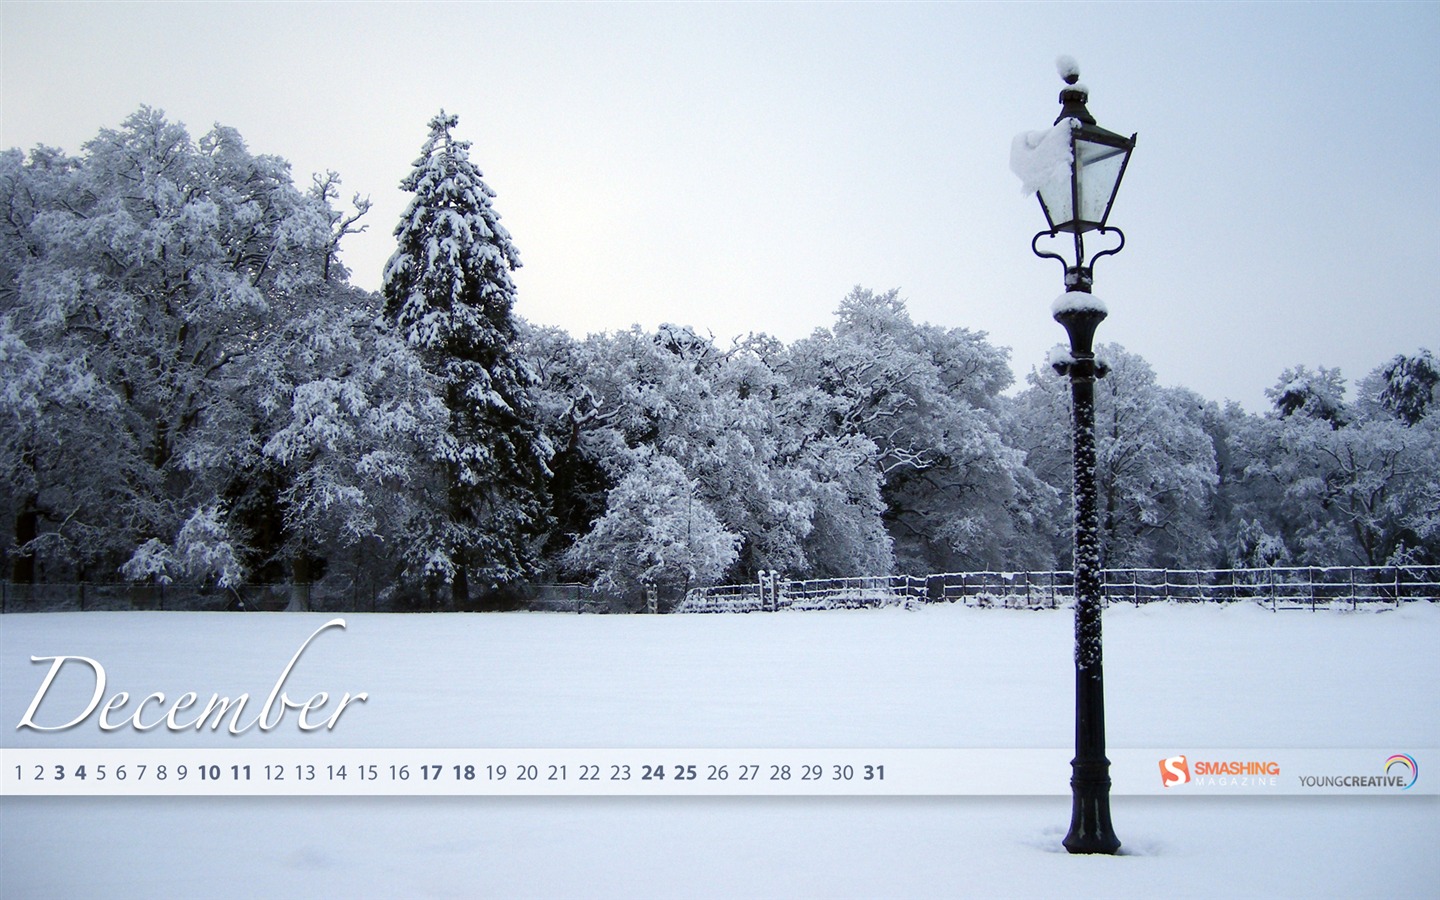 Décembre 2011 Calendar Wallpaper (2) #15 - 1440x900